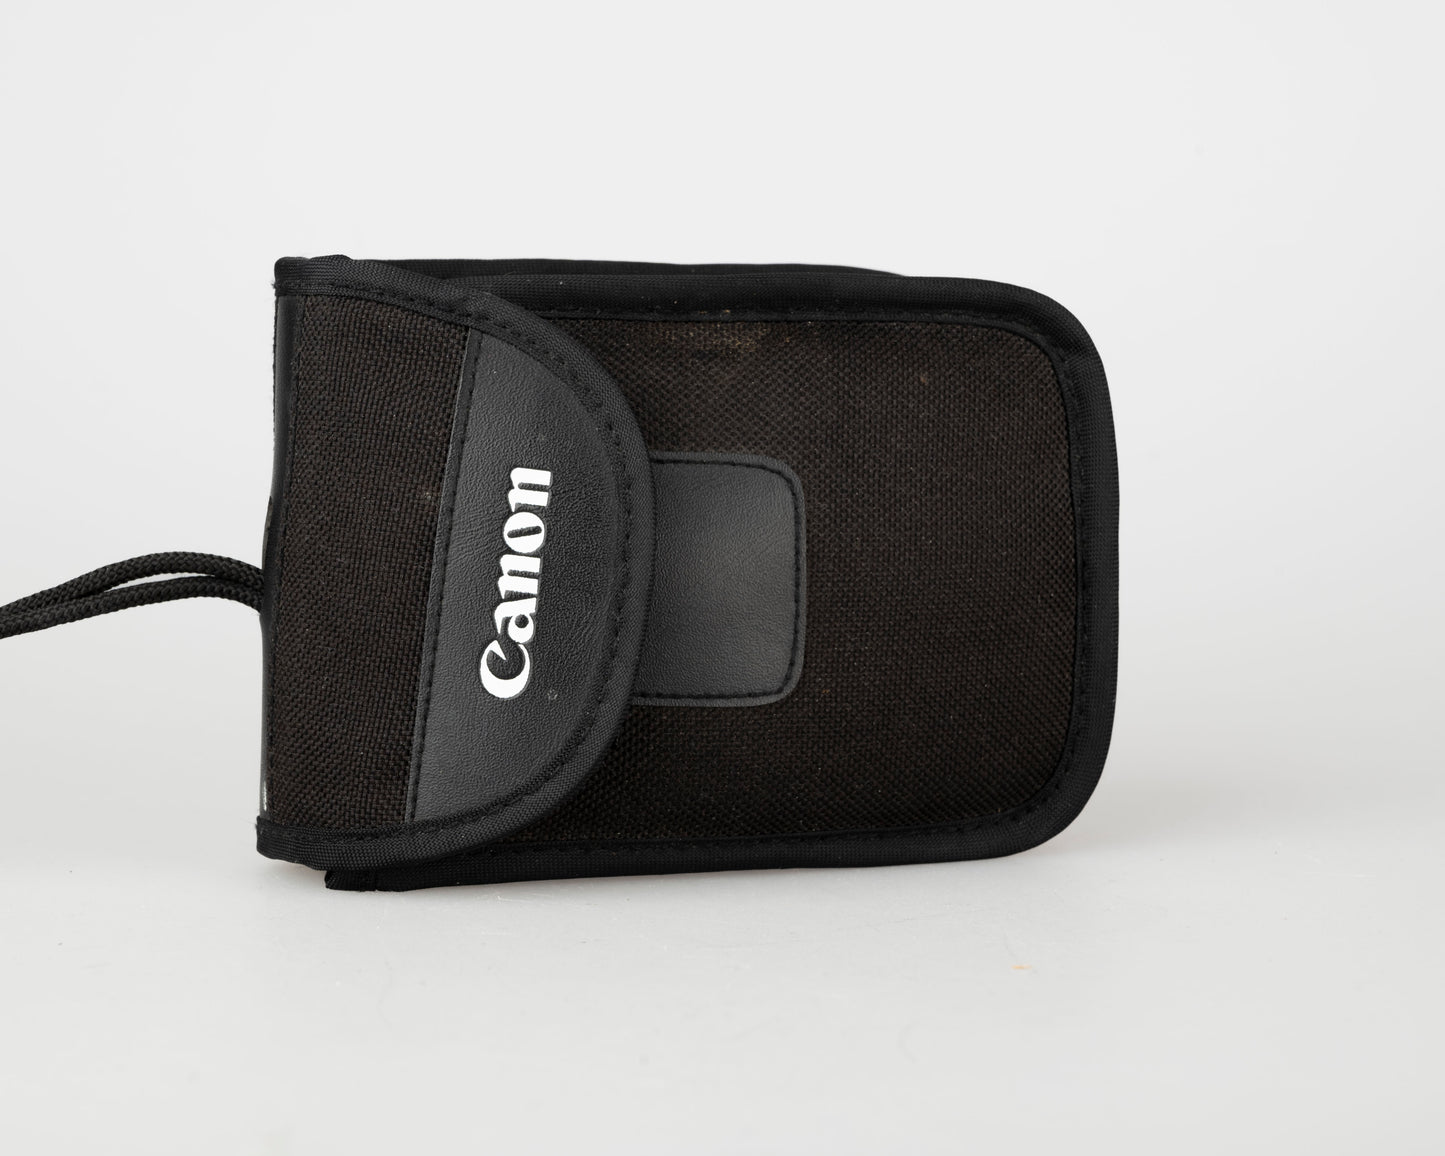 Canon Sure Shot Owl 35mm camera w/ case (serial 3642342)